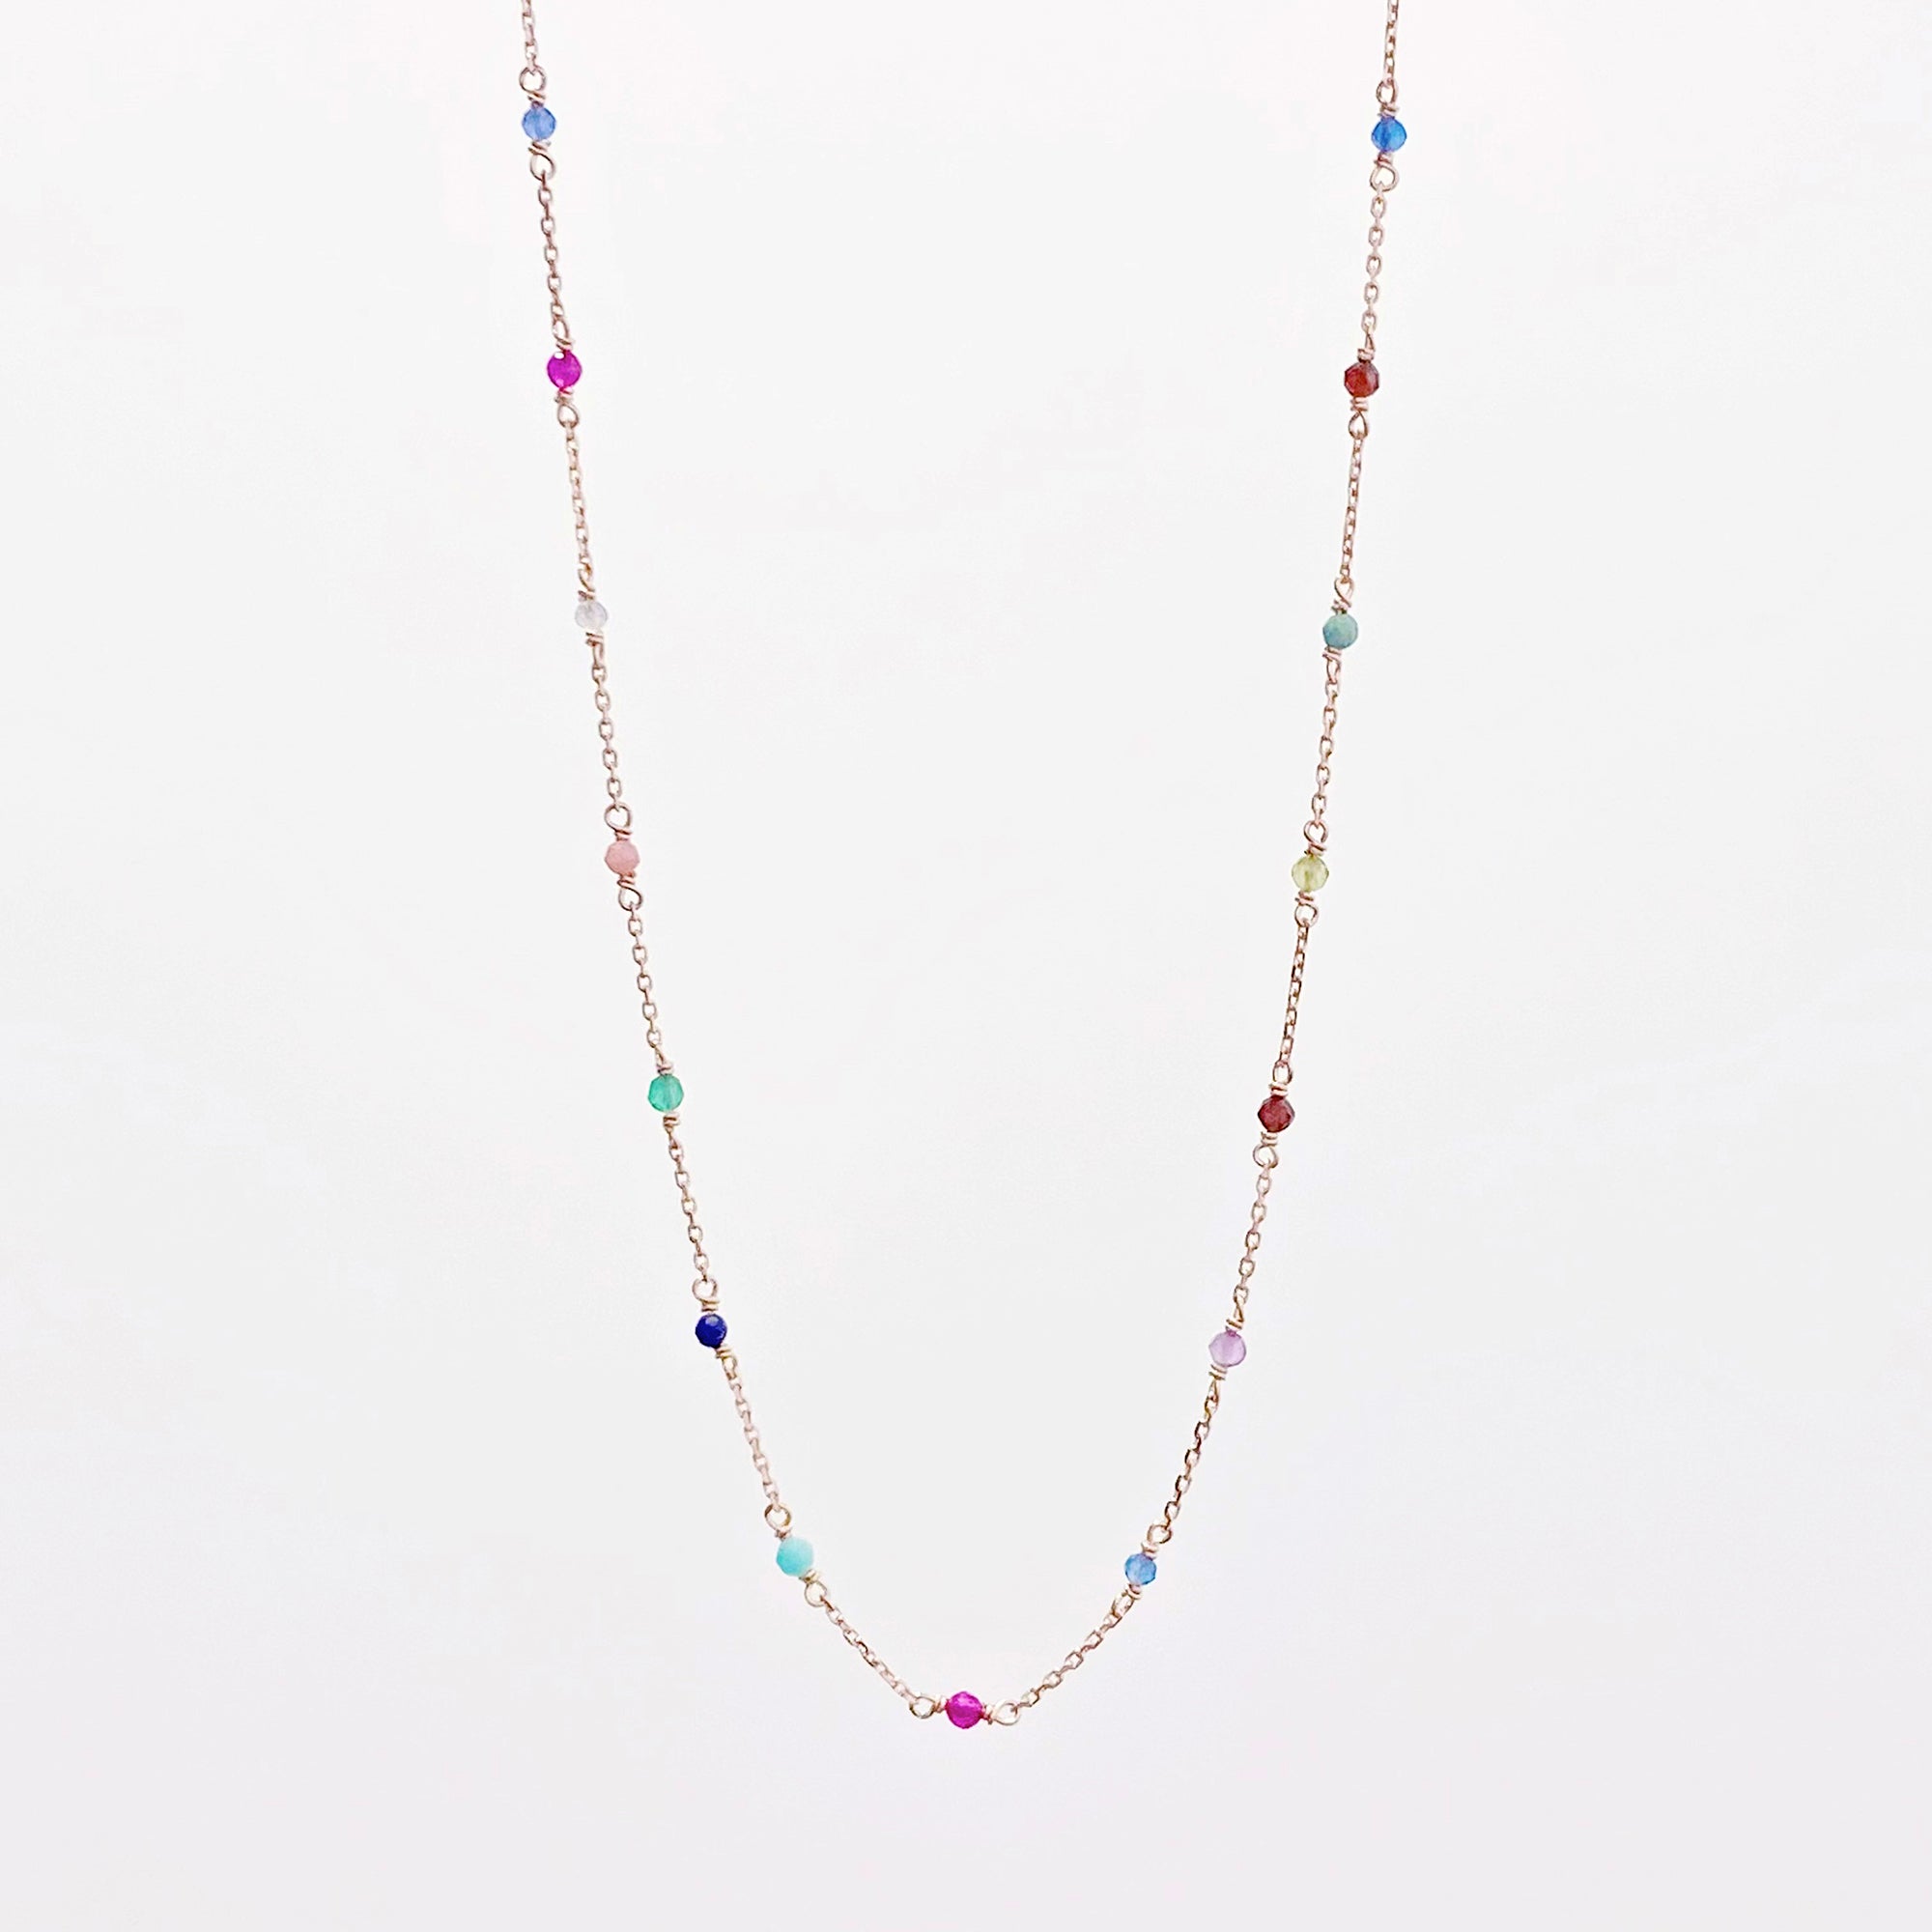 Multi-Gemstones Necklace